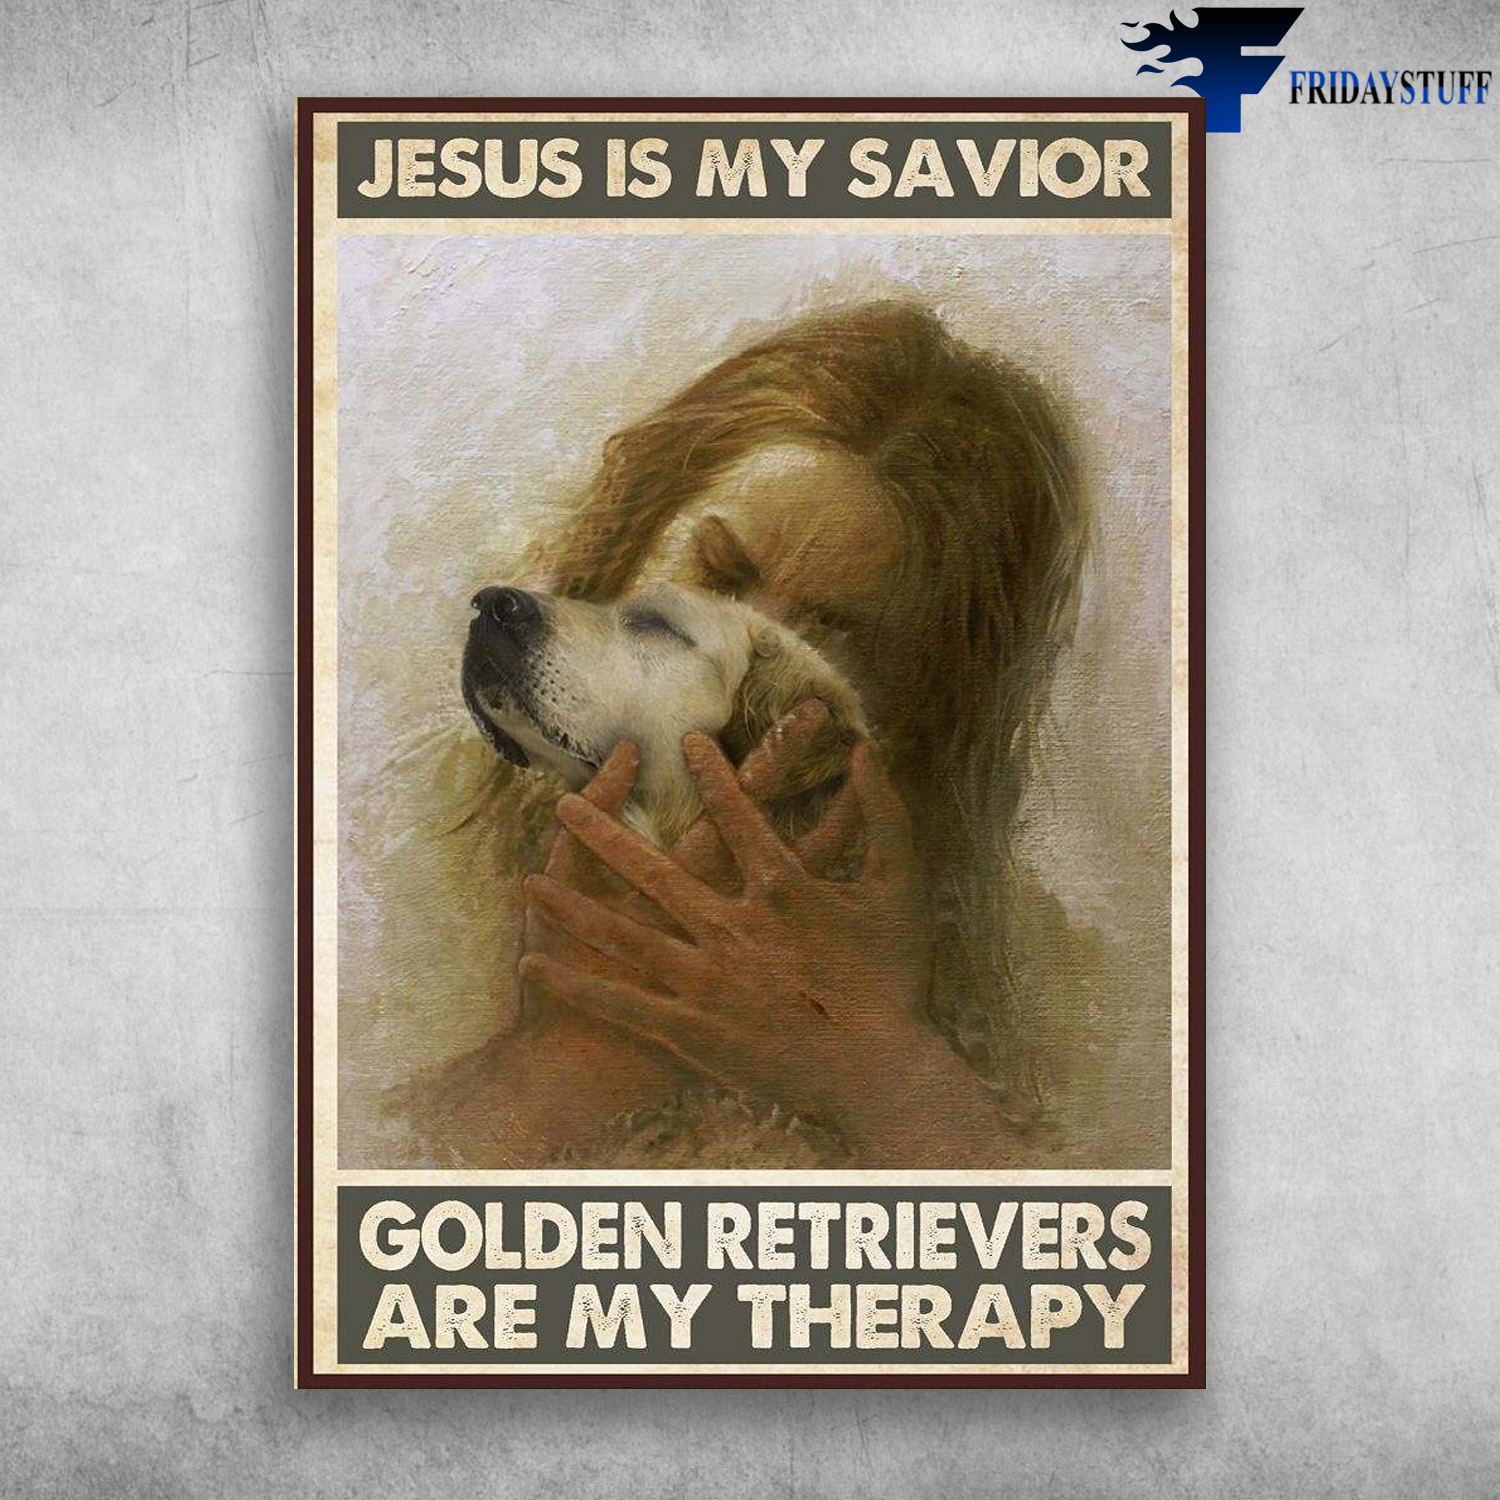 Golden Retriever God - Jesus Is My Savior, Golden Retrievers Are My Therapy